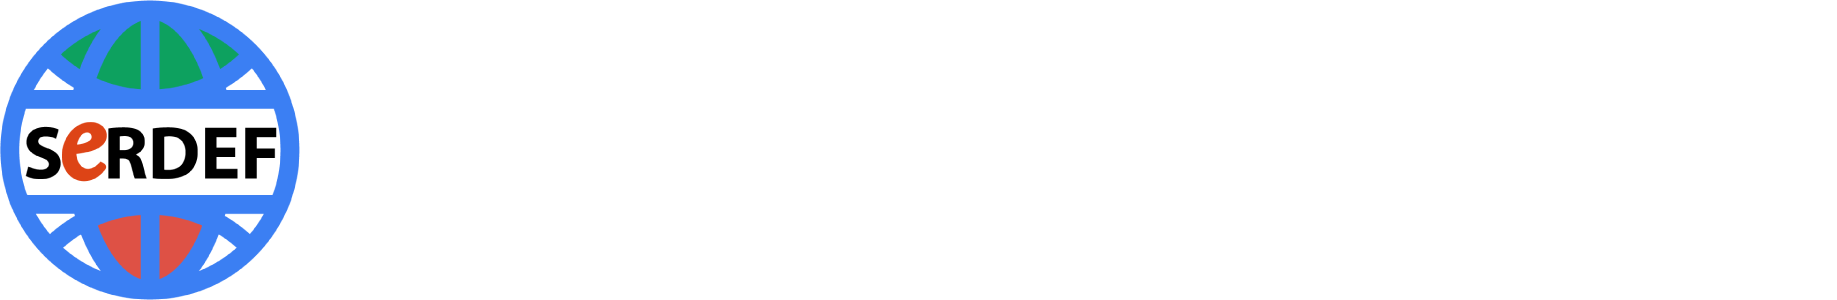 Small Enterprises Research and Development Foundation